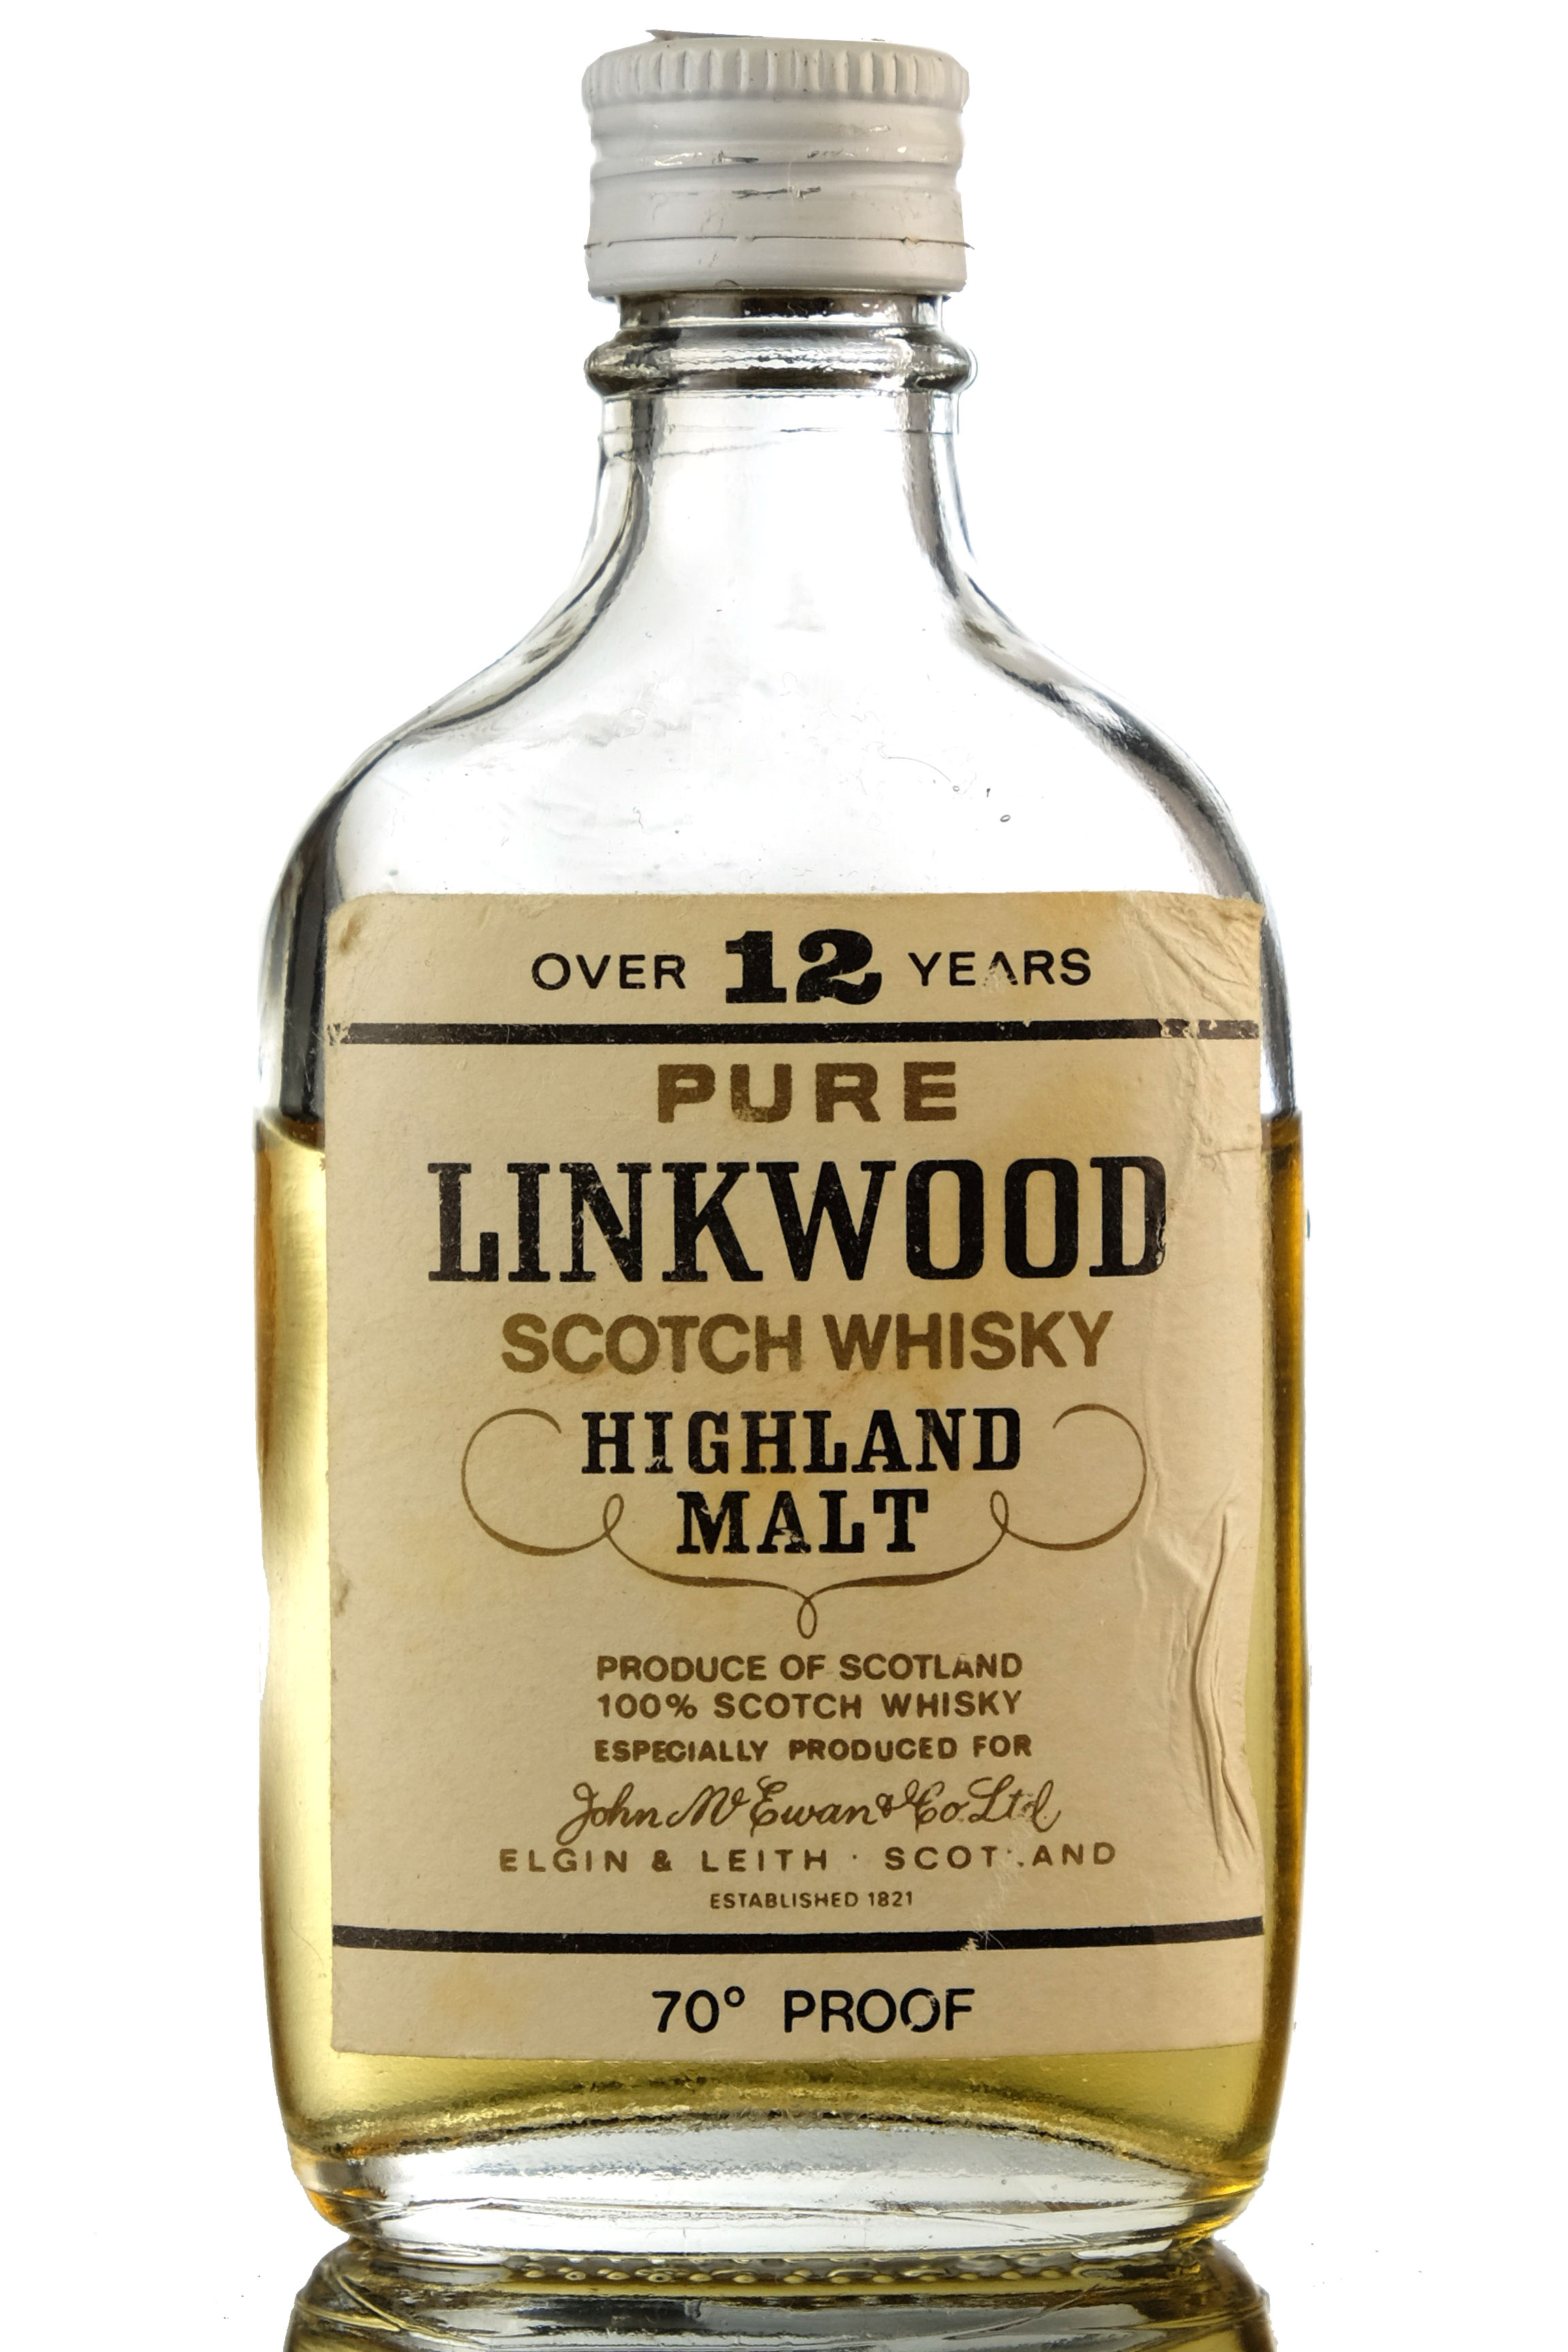 Linkwood 12 Year Old Miniature